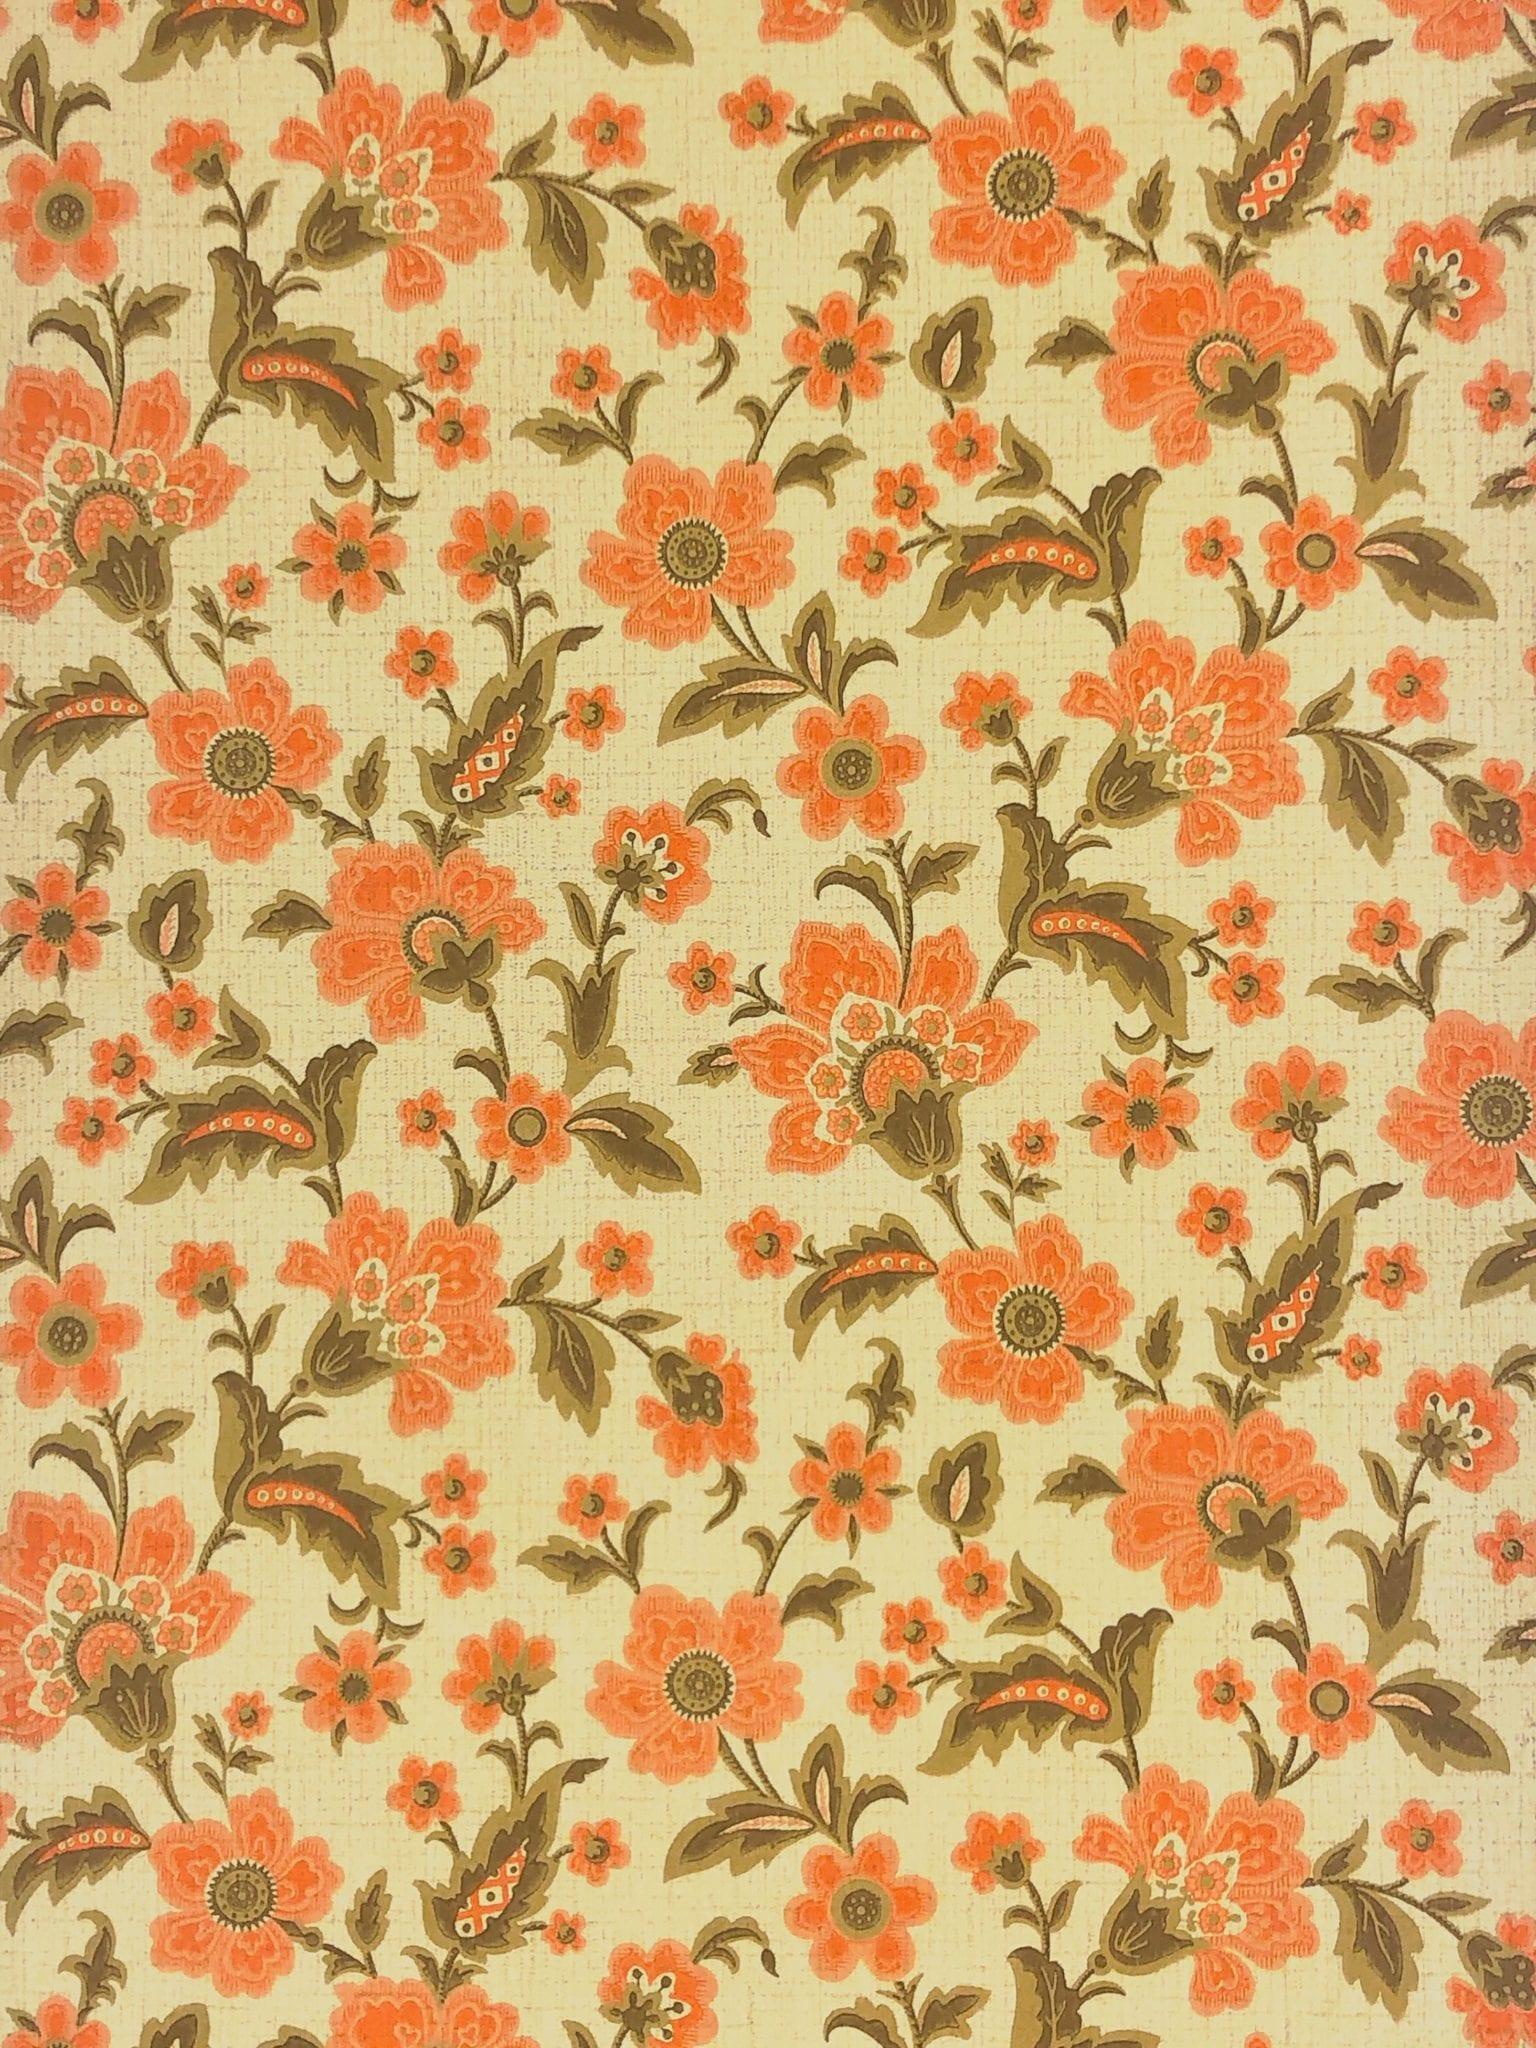 Free download Orange Floral Vintage 60s Handmade Cushion Cover Black